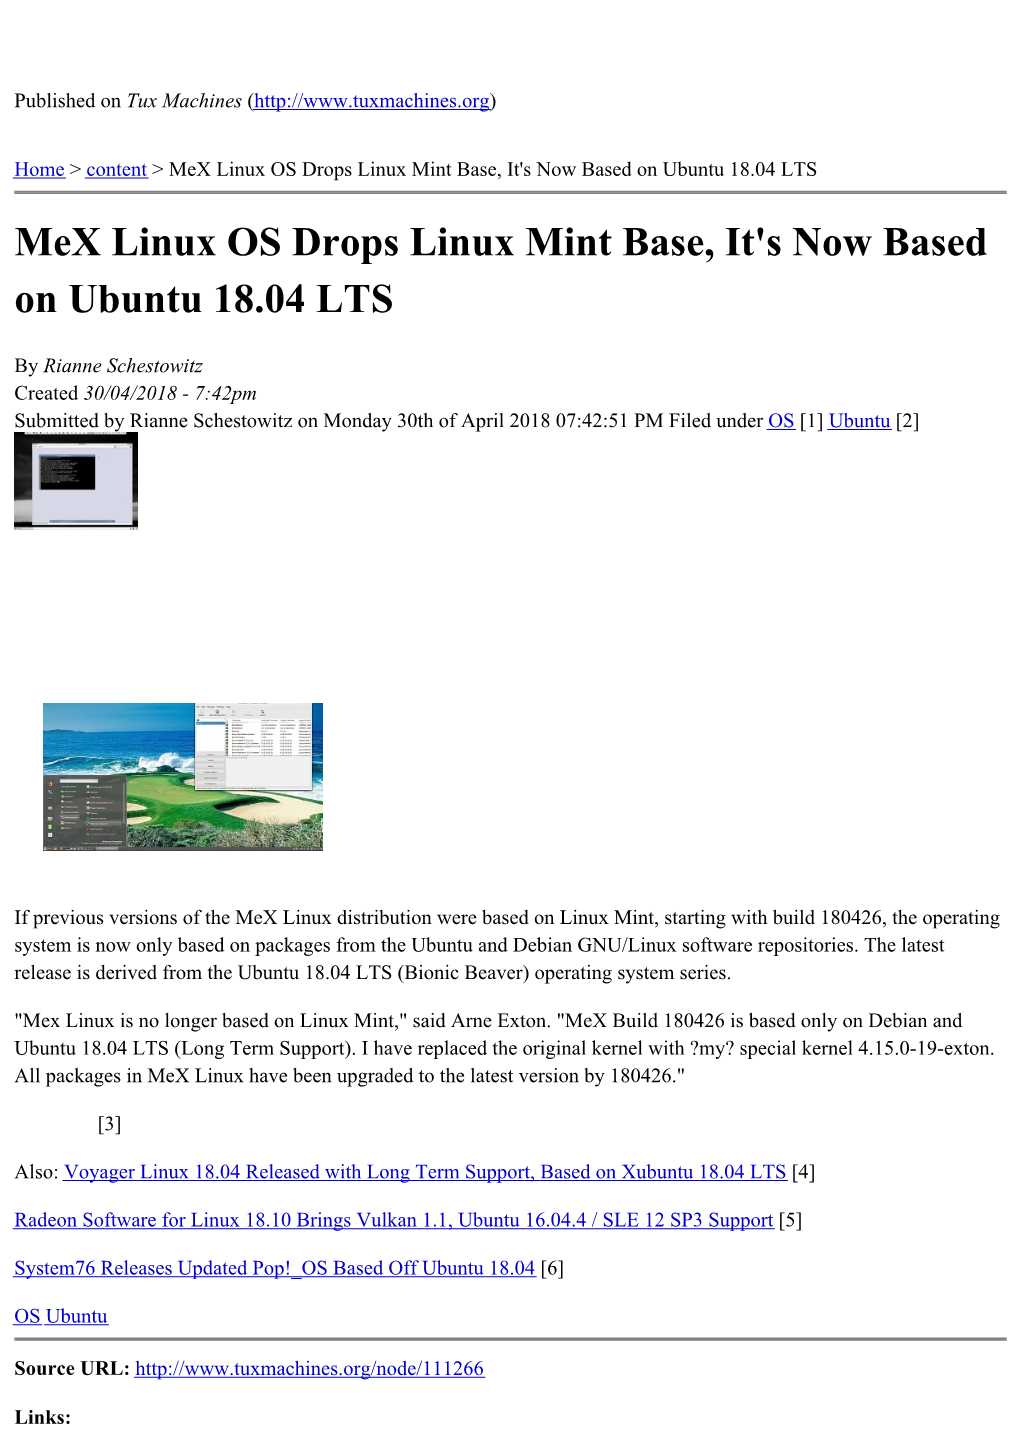 Mex Linux OS Drops Linux Mint Base, It's Now Based on Ubuntu 18.04 LTS